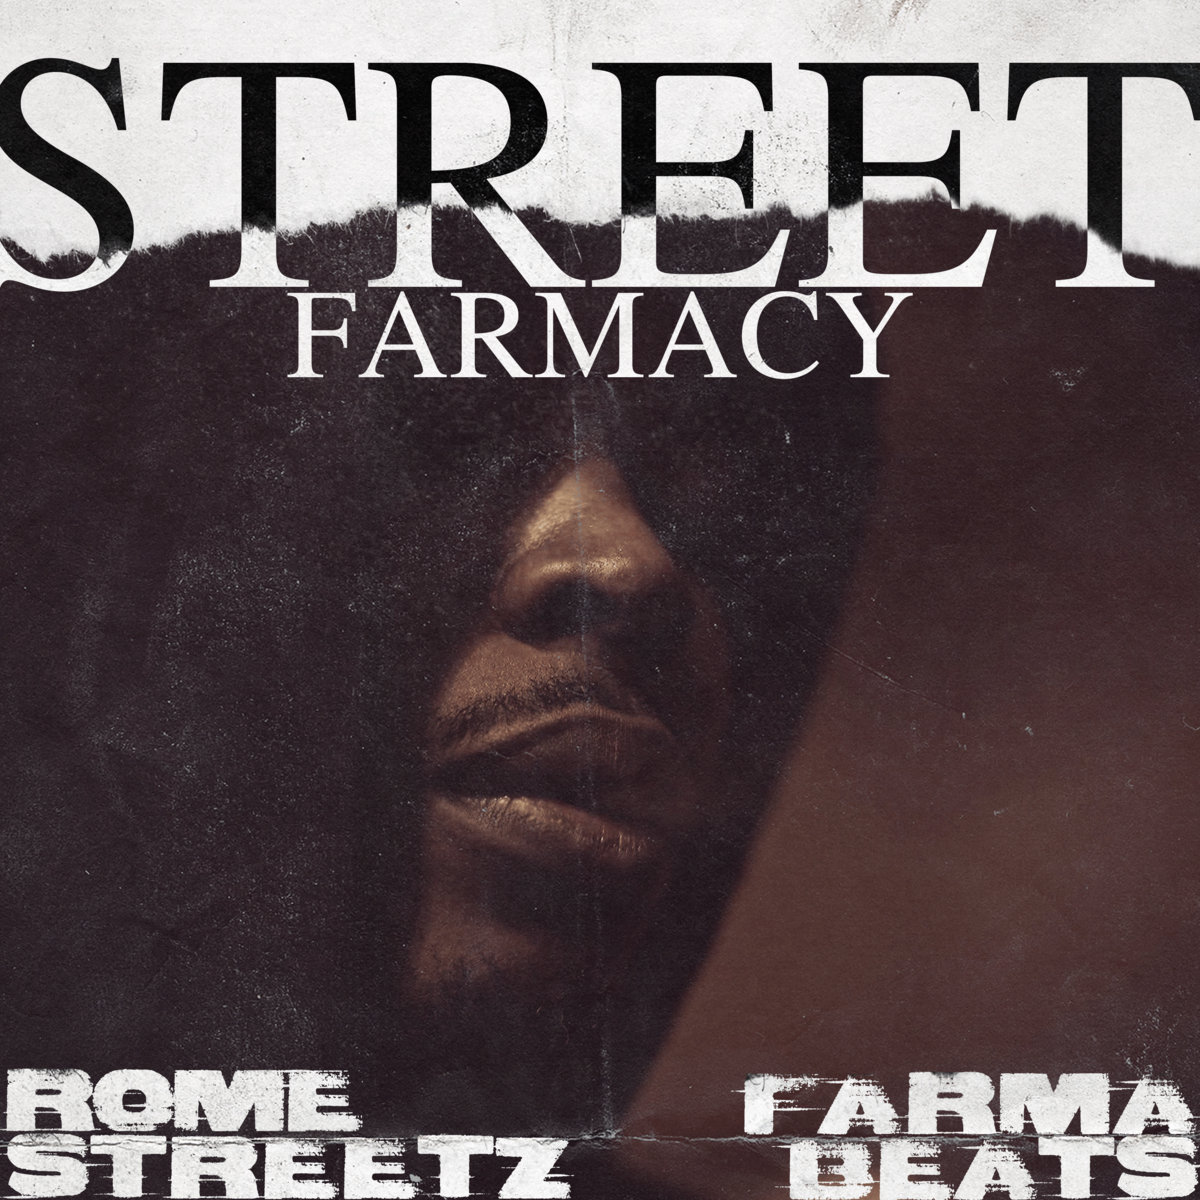 Street_farmacy